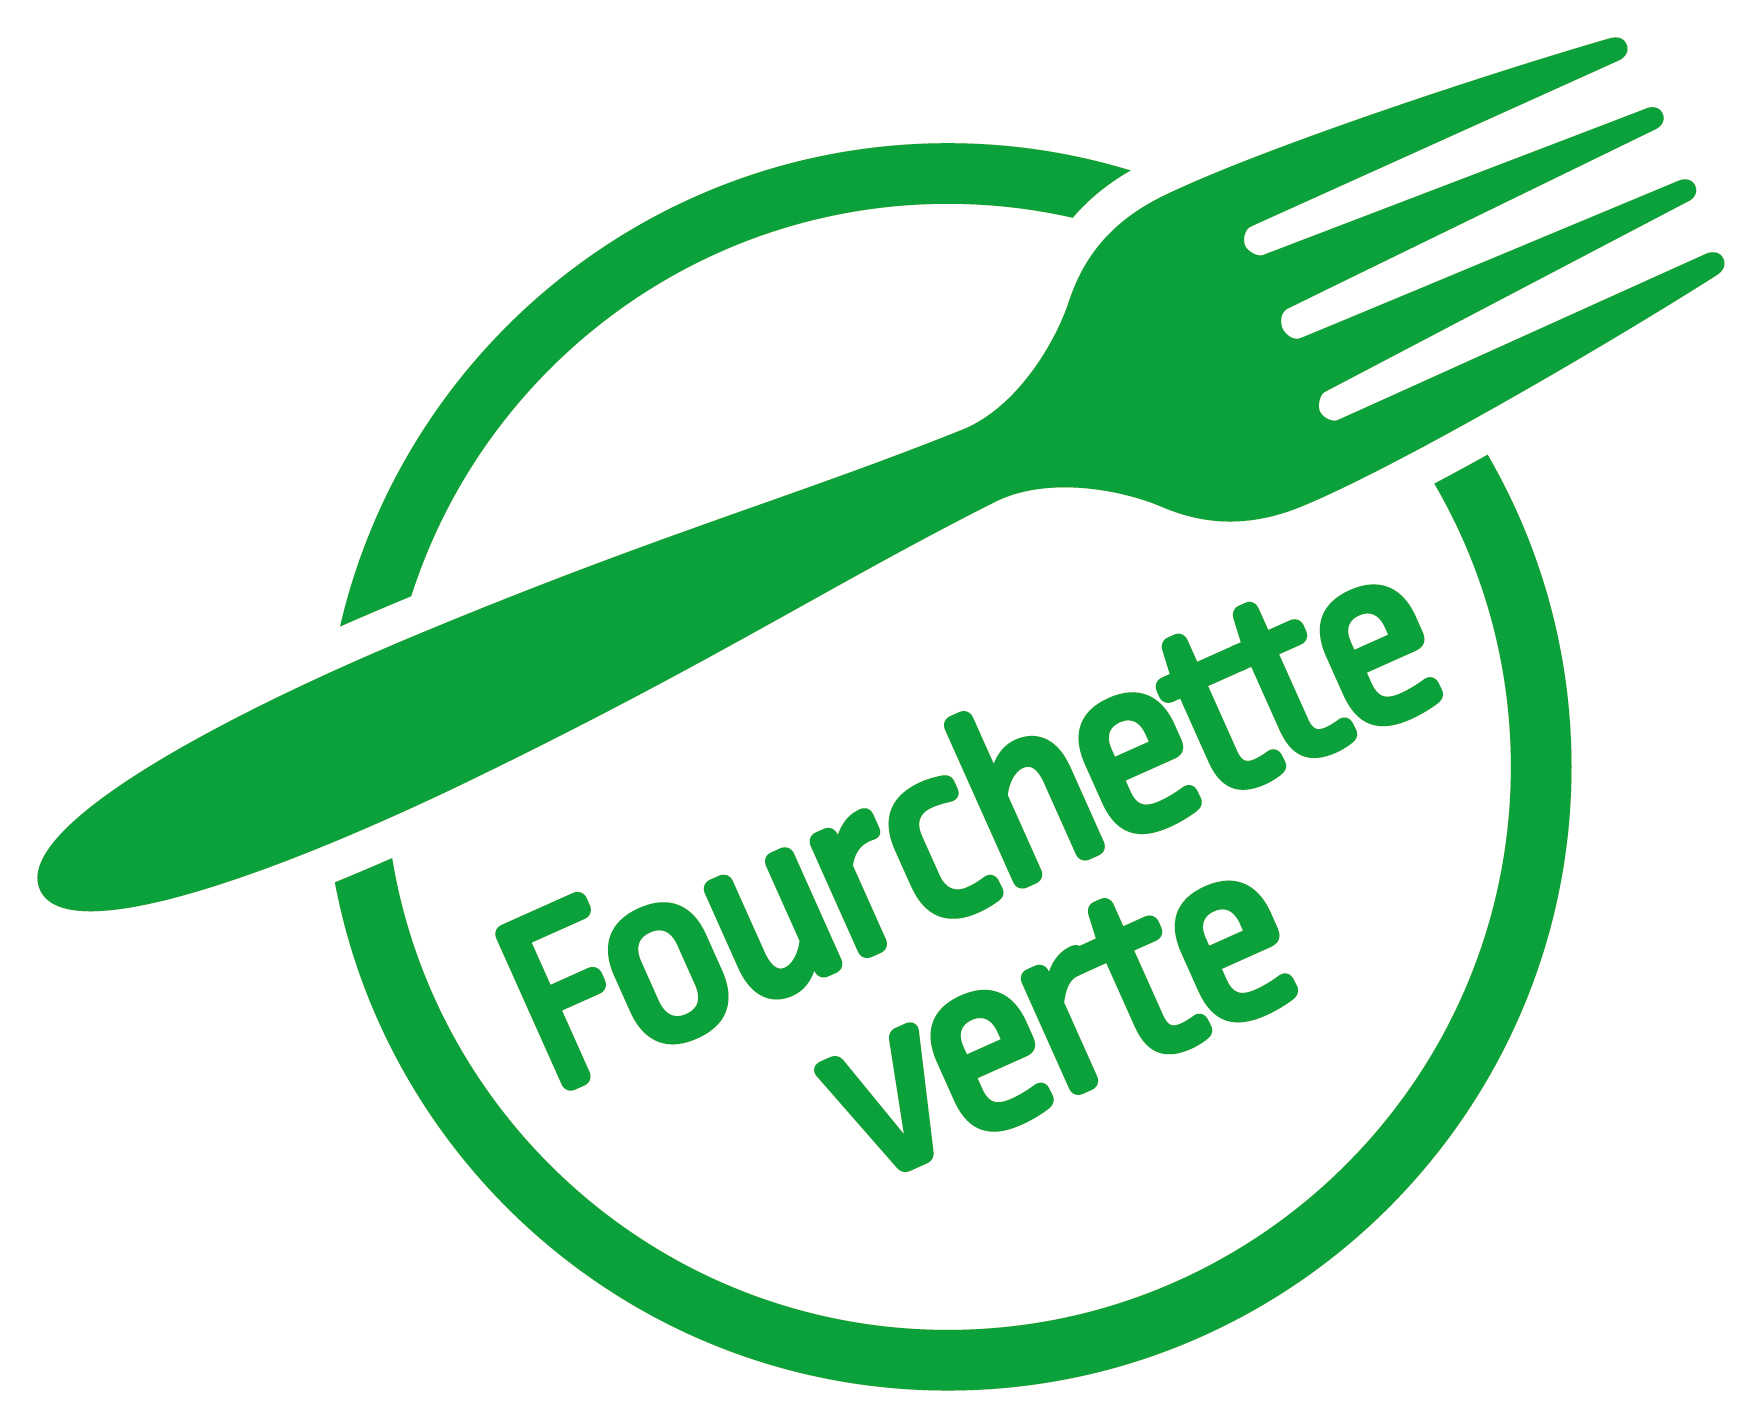 Fourchette verte — Wikipédia